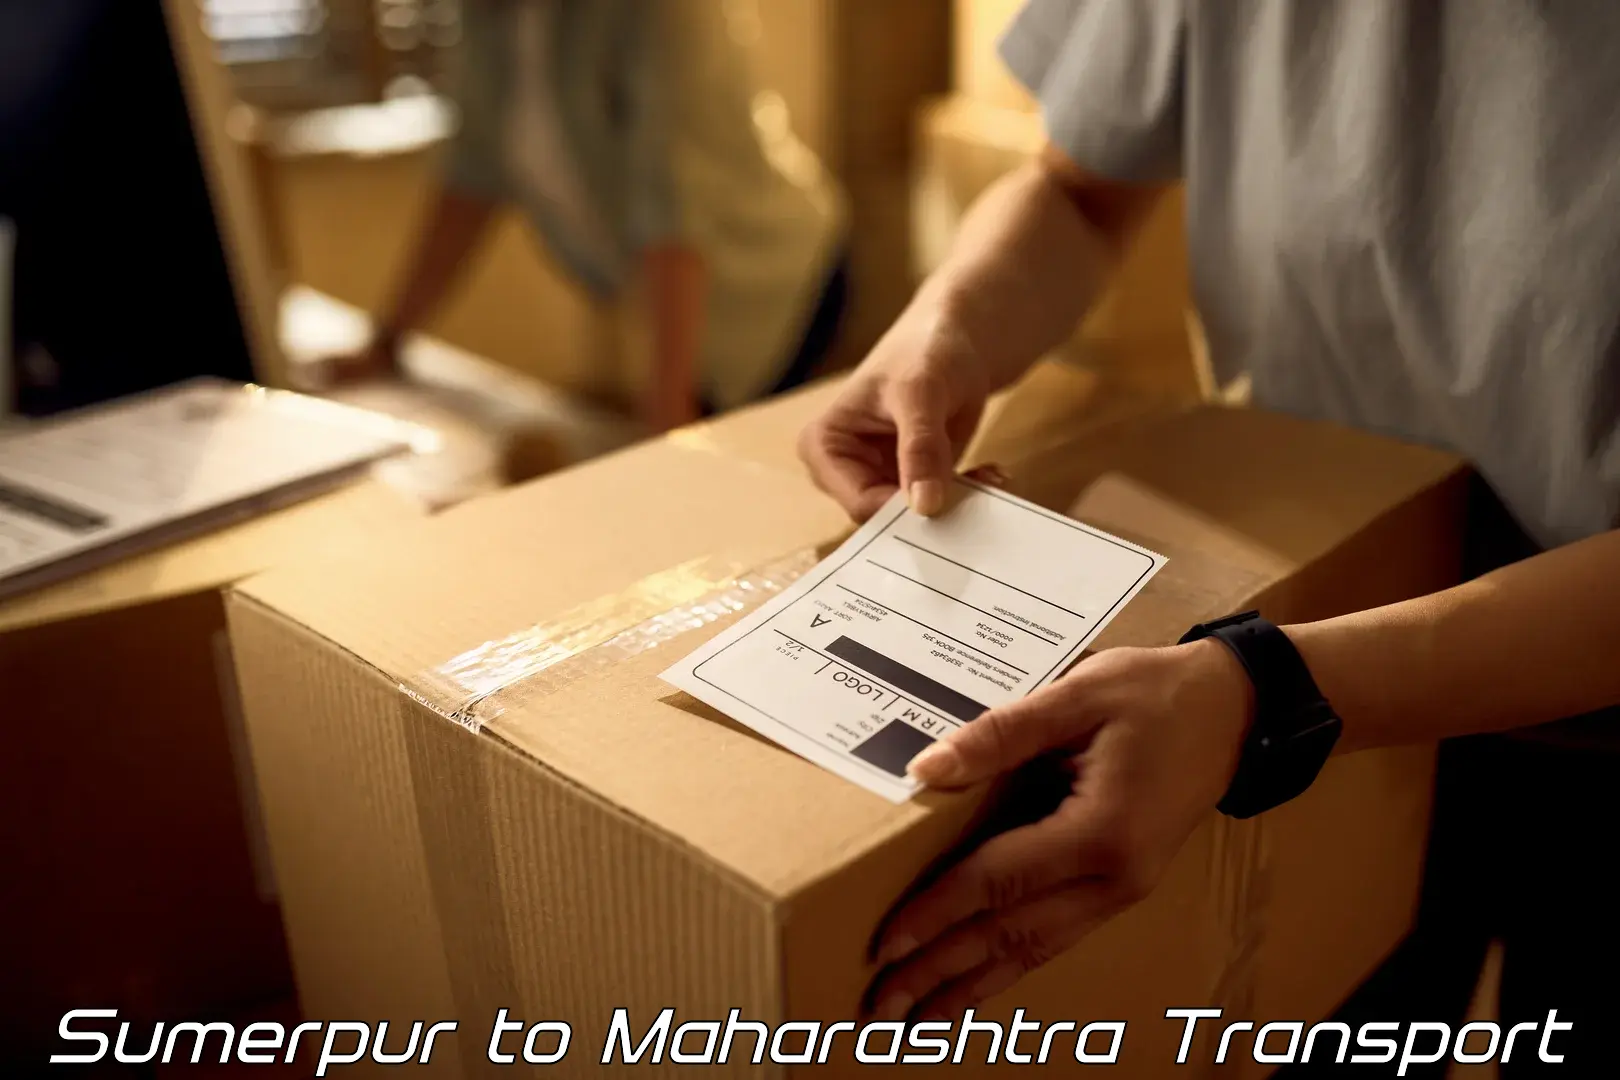 Transport shared services Sumerpur to Raigarh Maharashtra